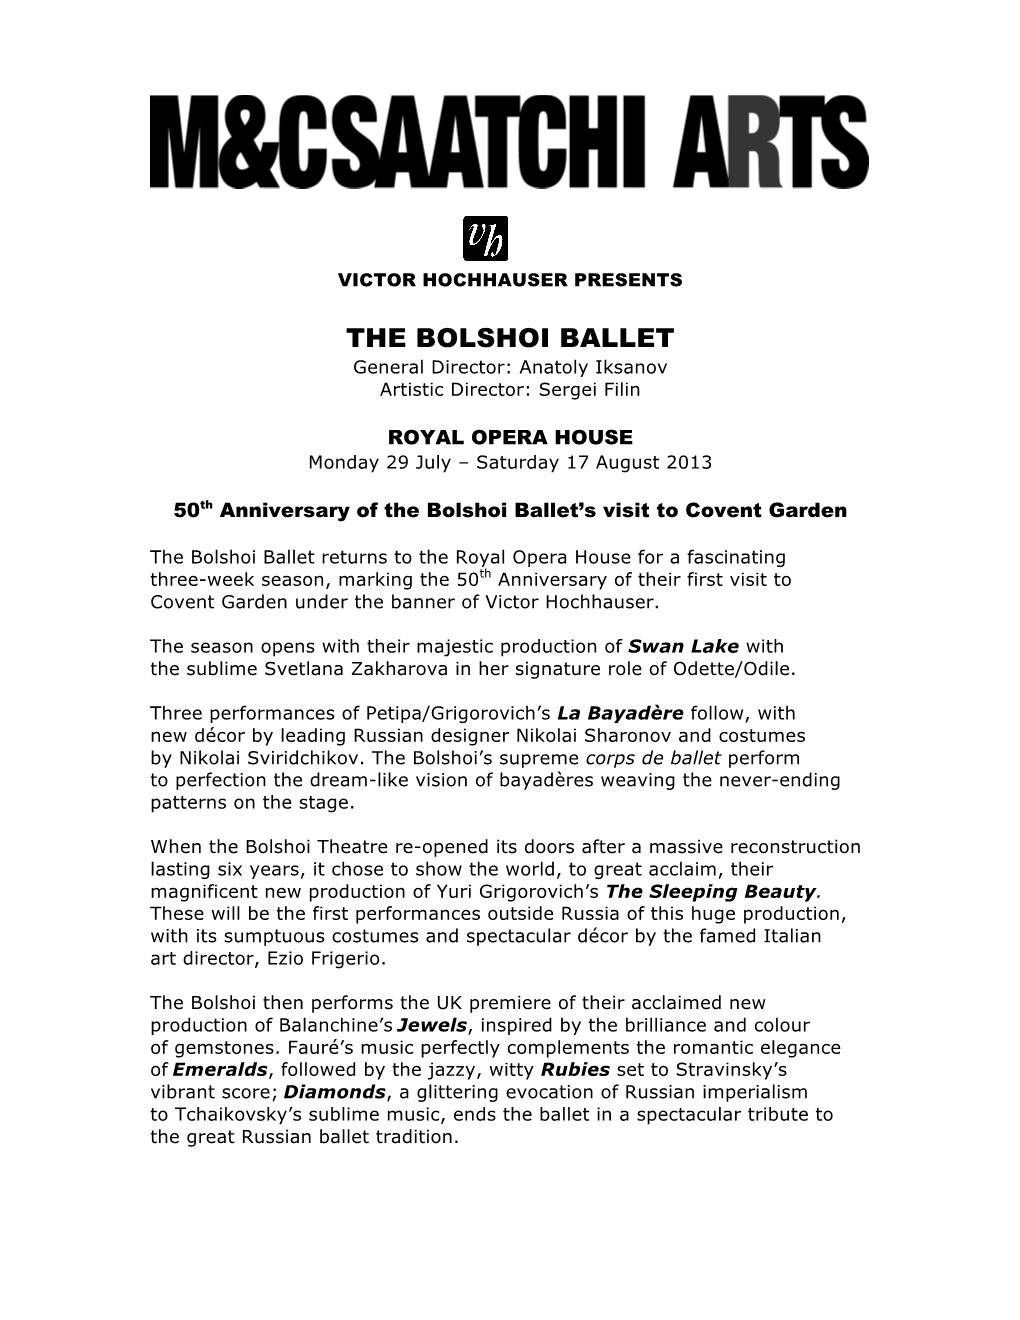 THE BOLSHOI BALLET General Director: Anatoly Iksanov Artistic Director: Sergei Filin